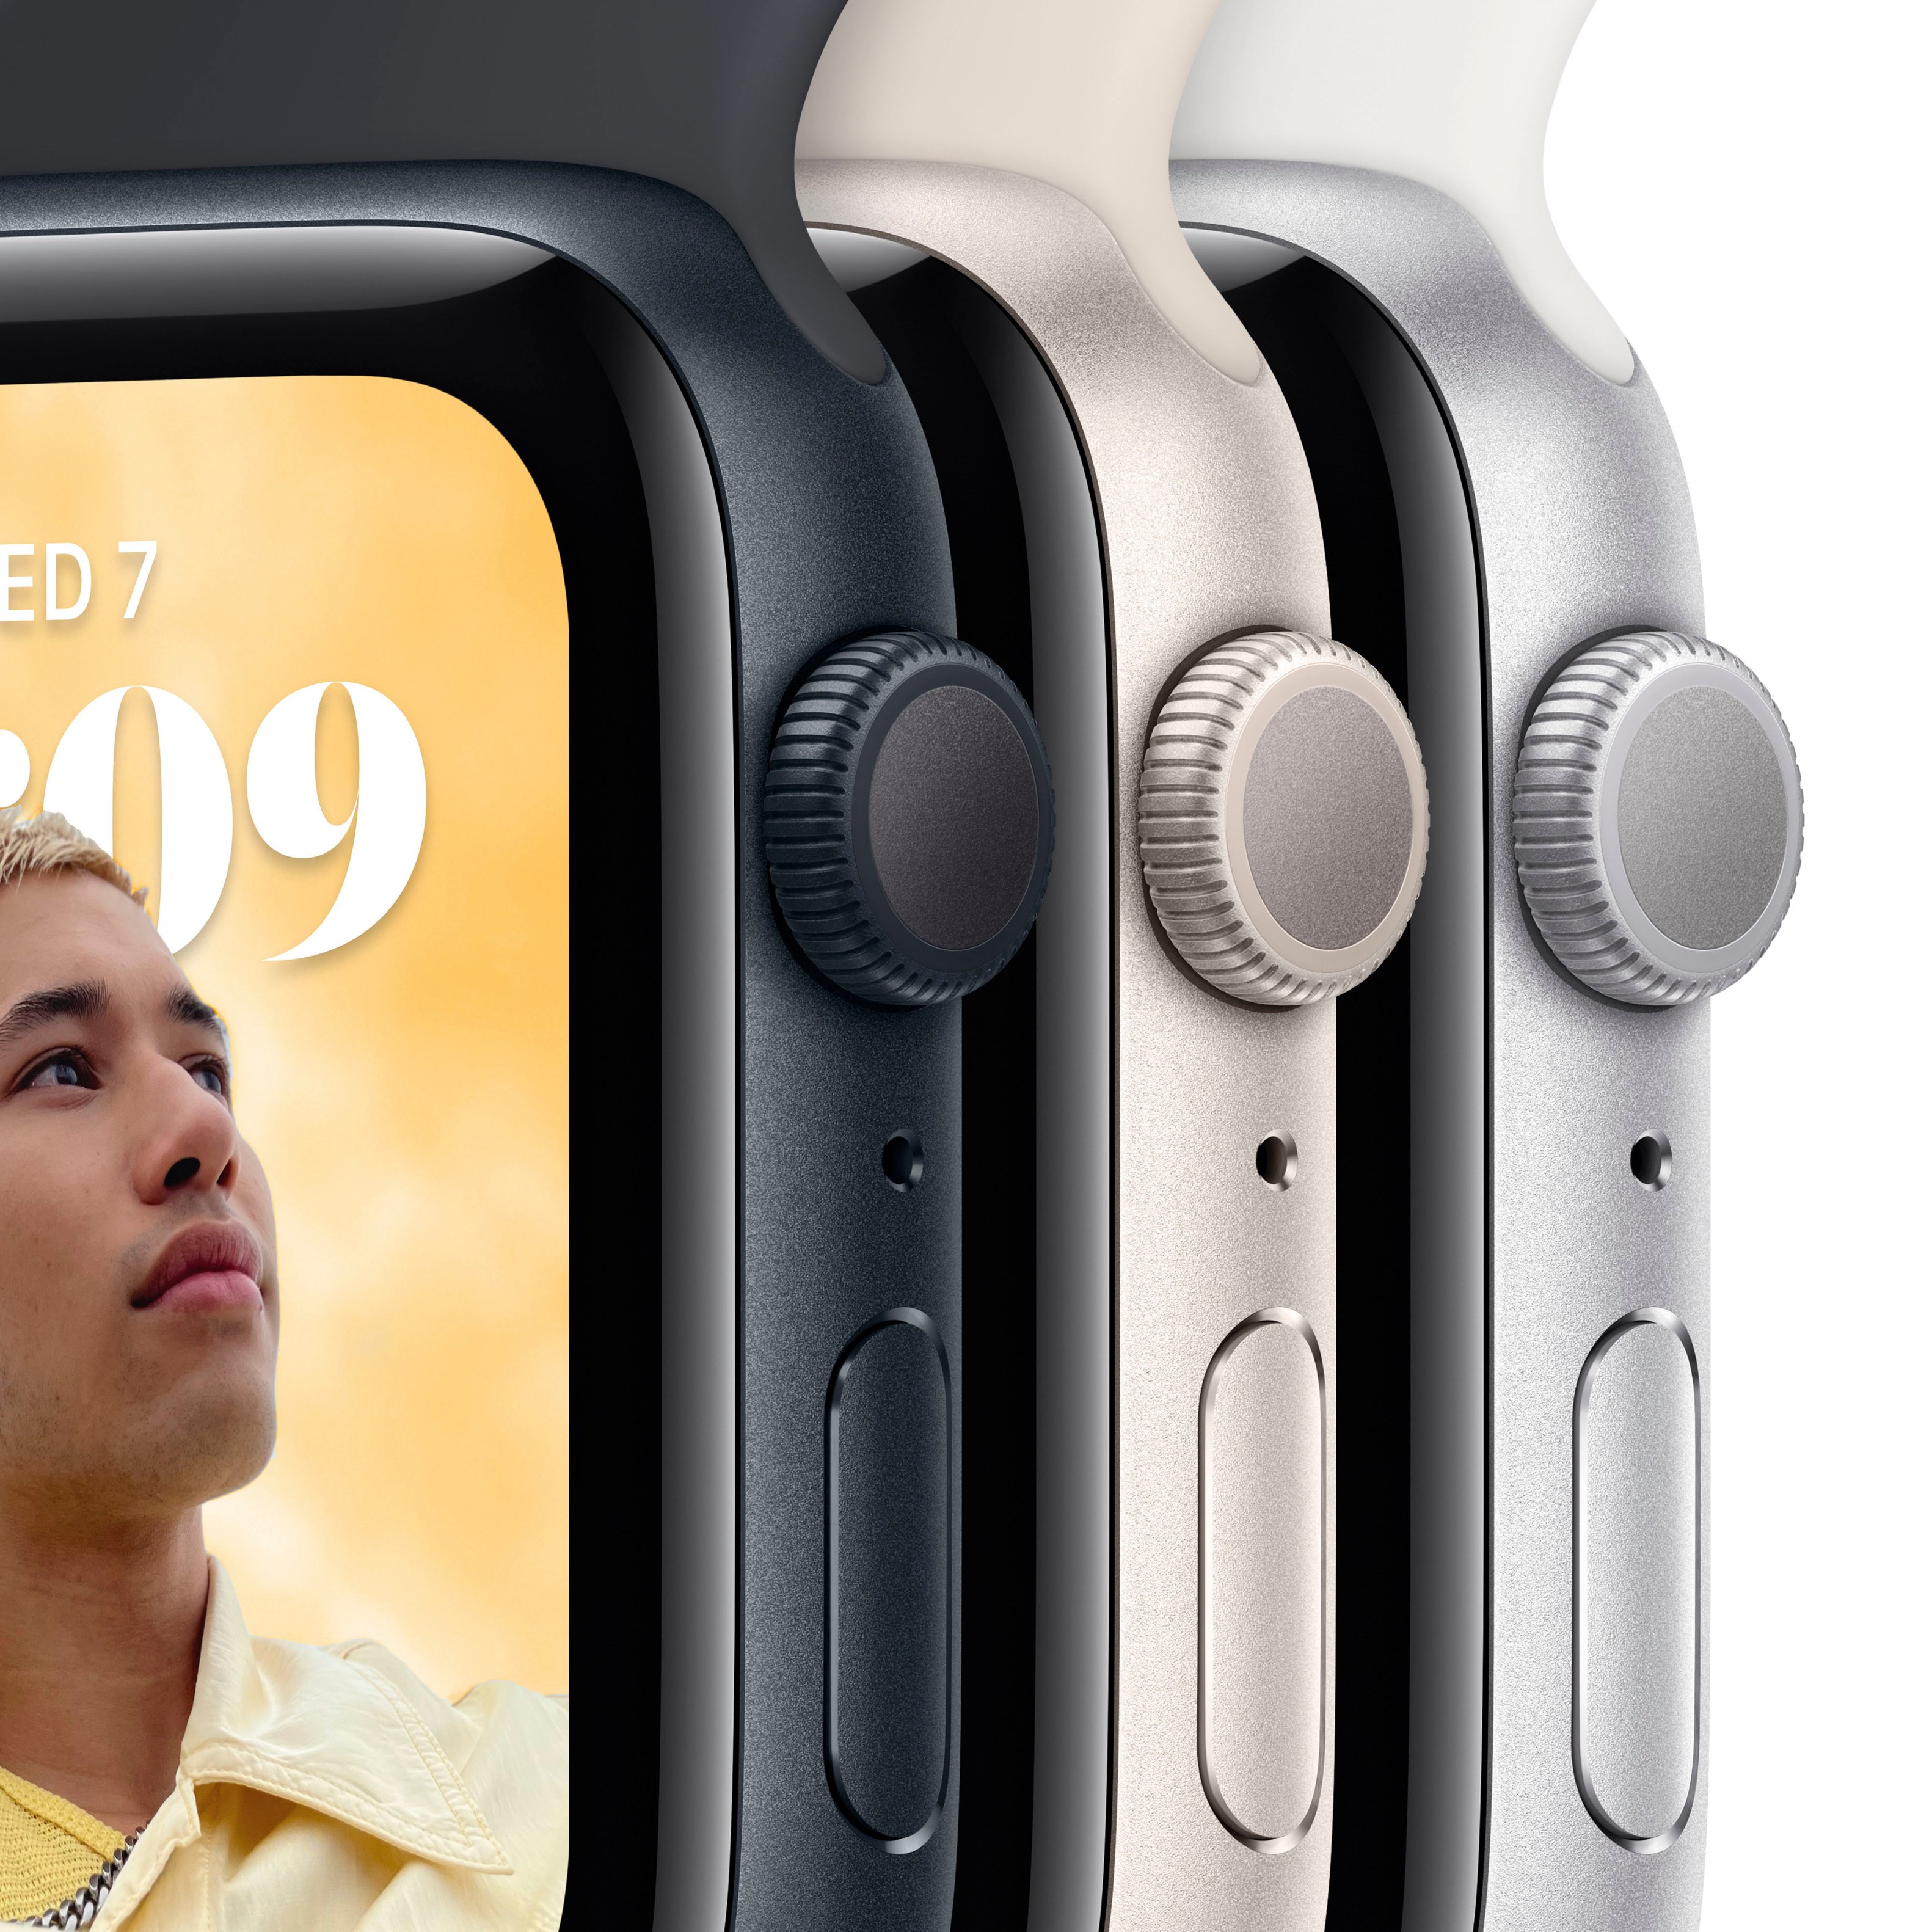 Buy Apple Watch SE GPS, 40mm Midnight Aluminum Case with Light